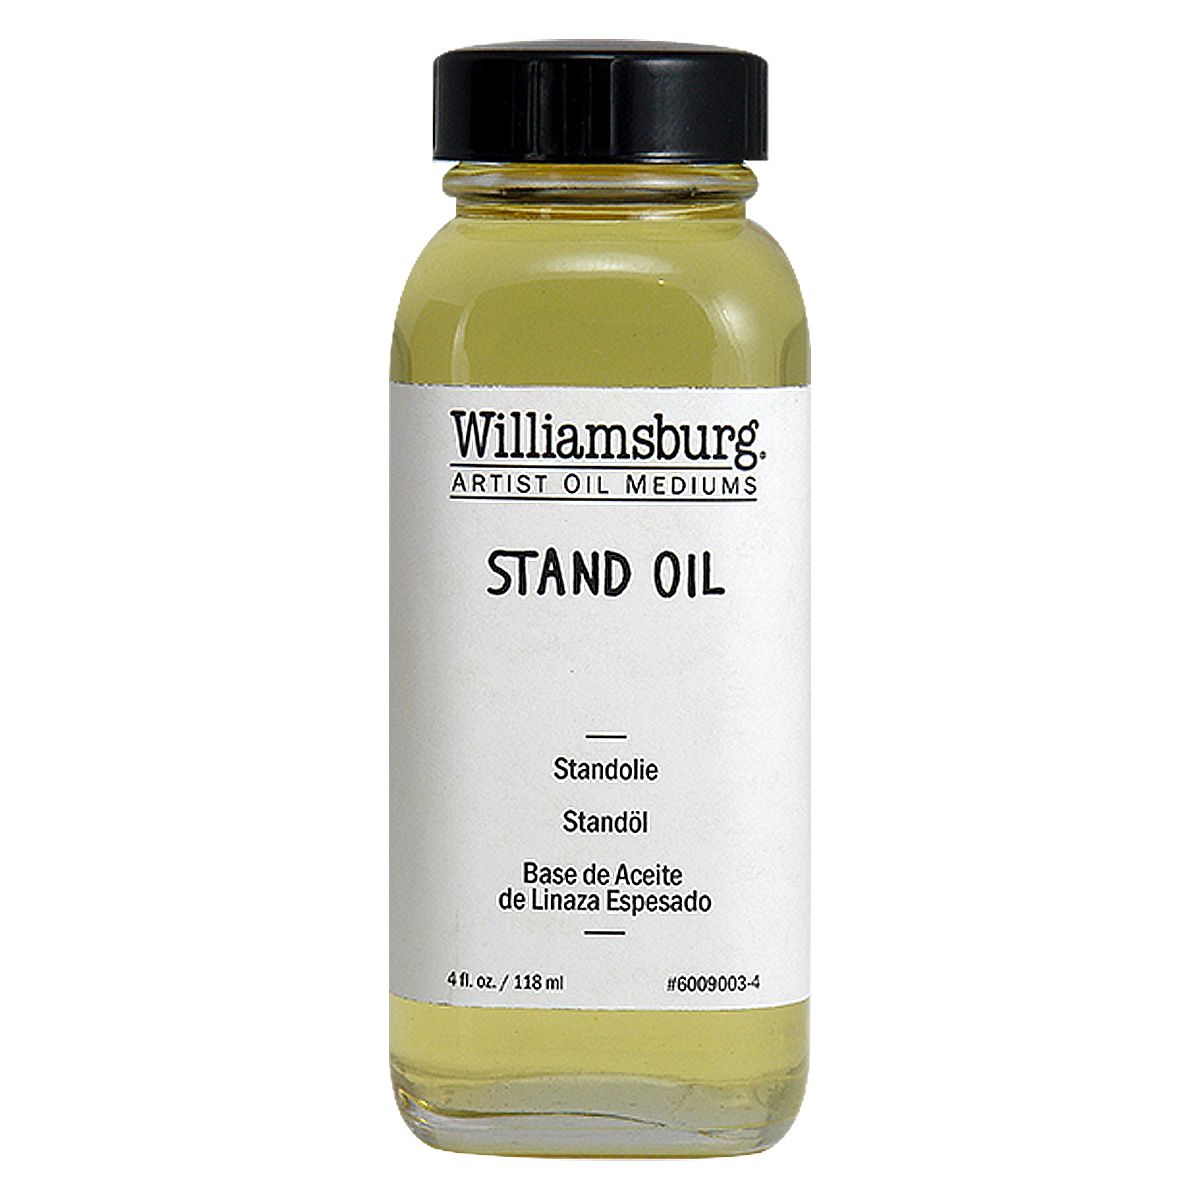 Williamsburg Stand Oil, 4oz Bottle